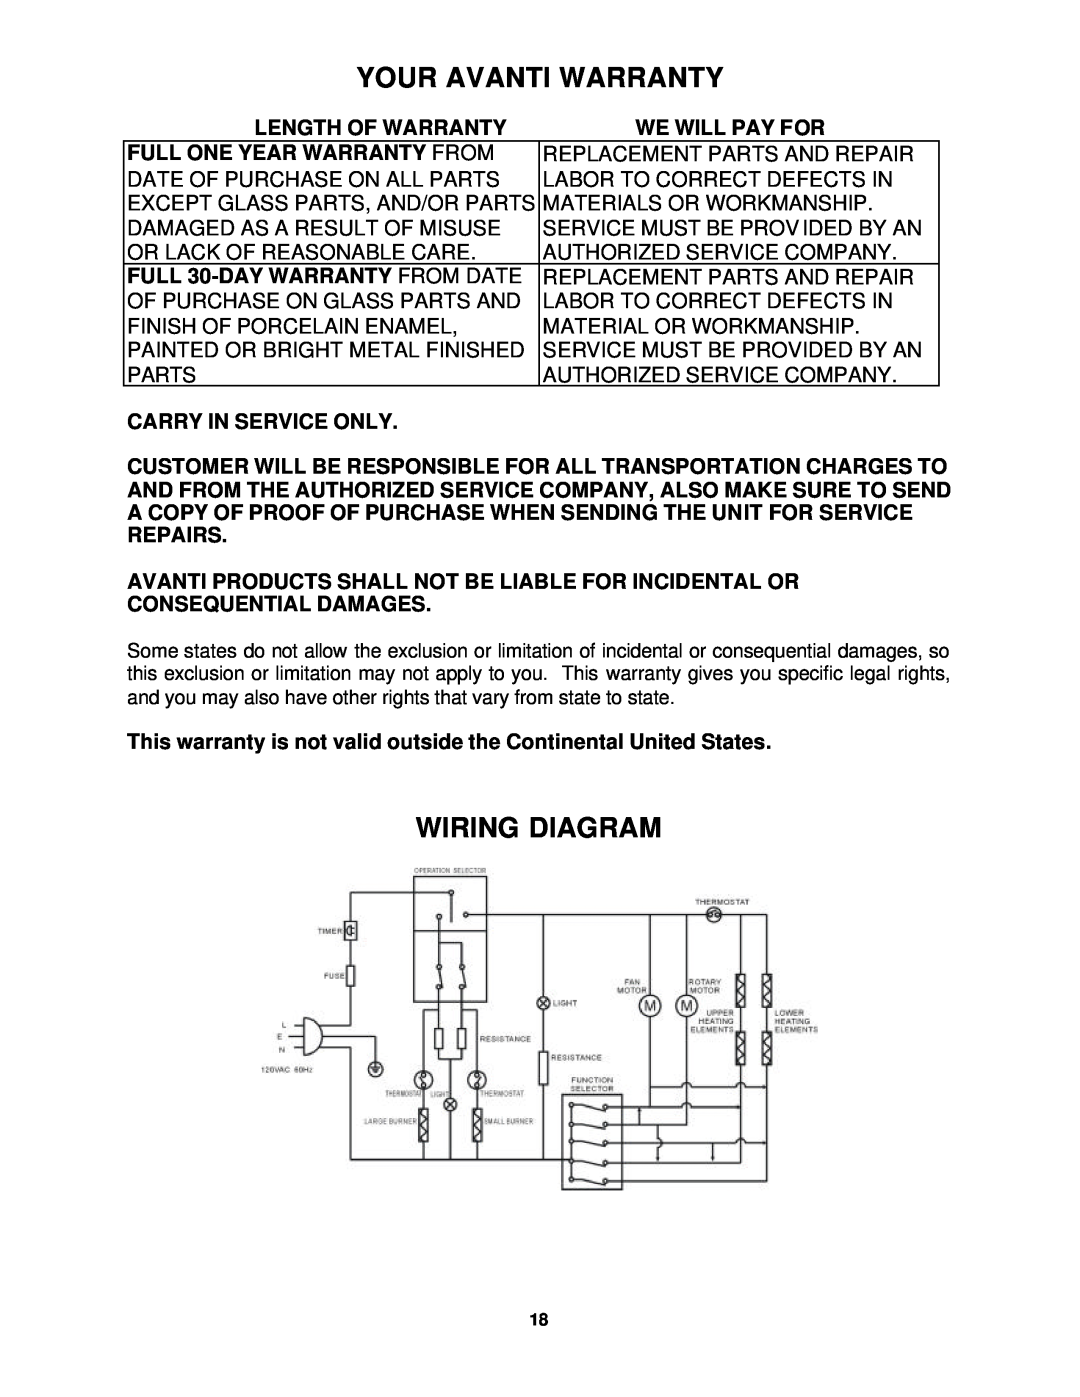 Avanti OCRB43W instruction manual Your Avanti Warranty, Wiring Diagram 